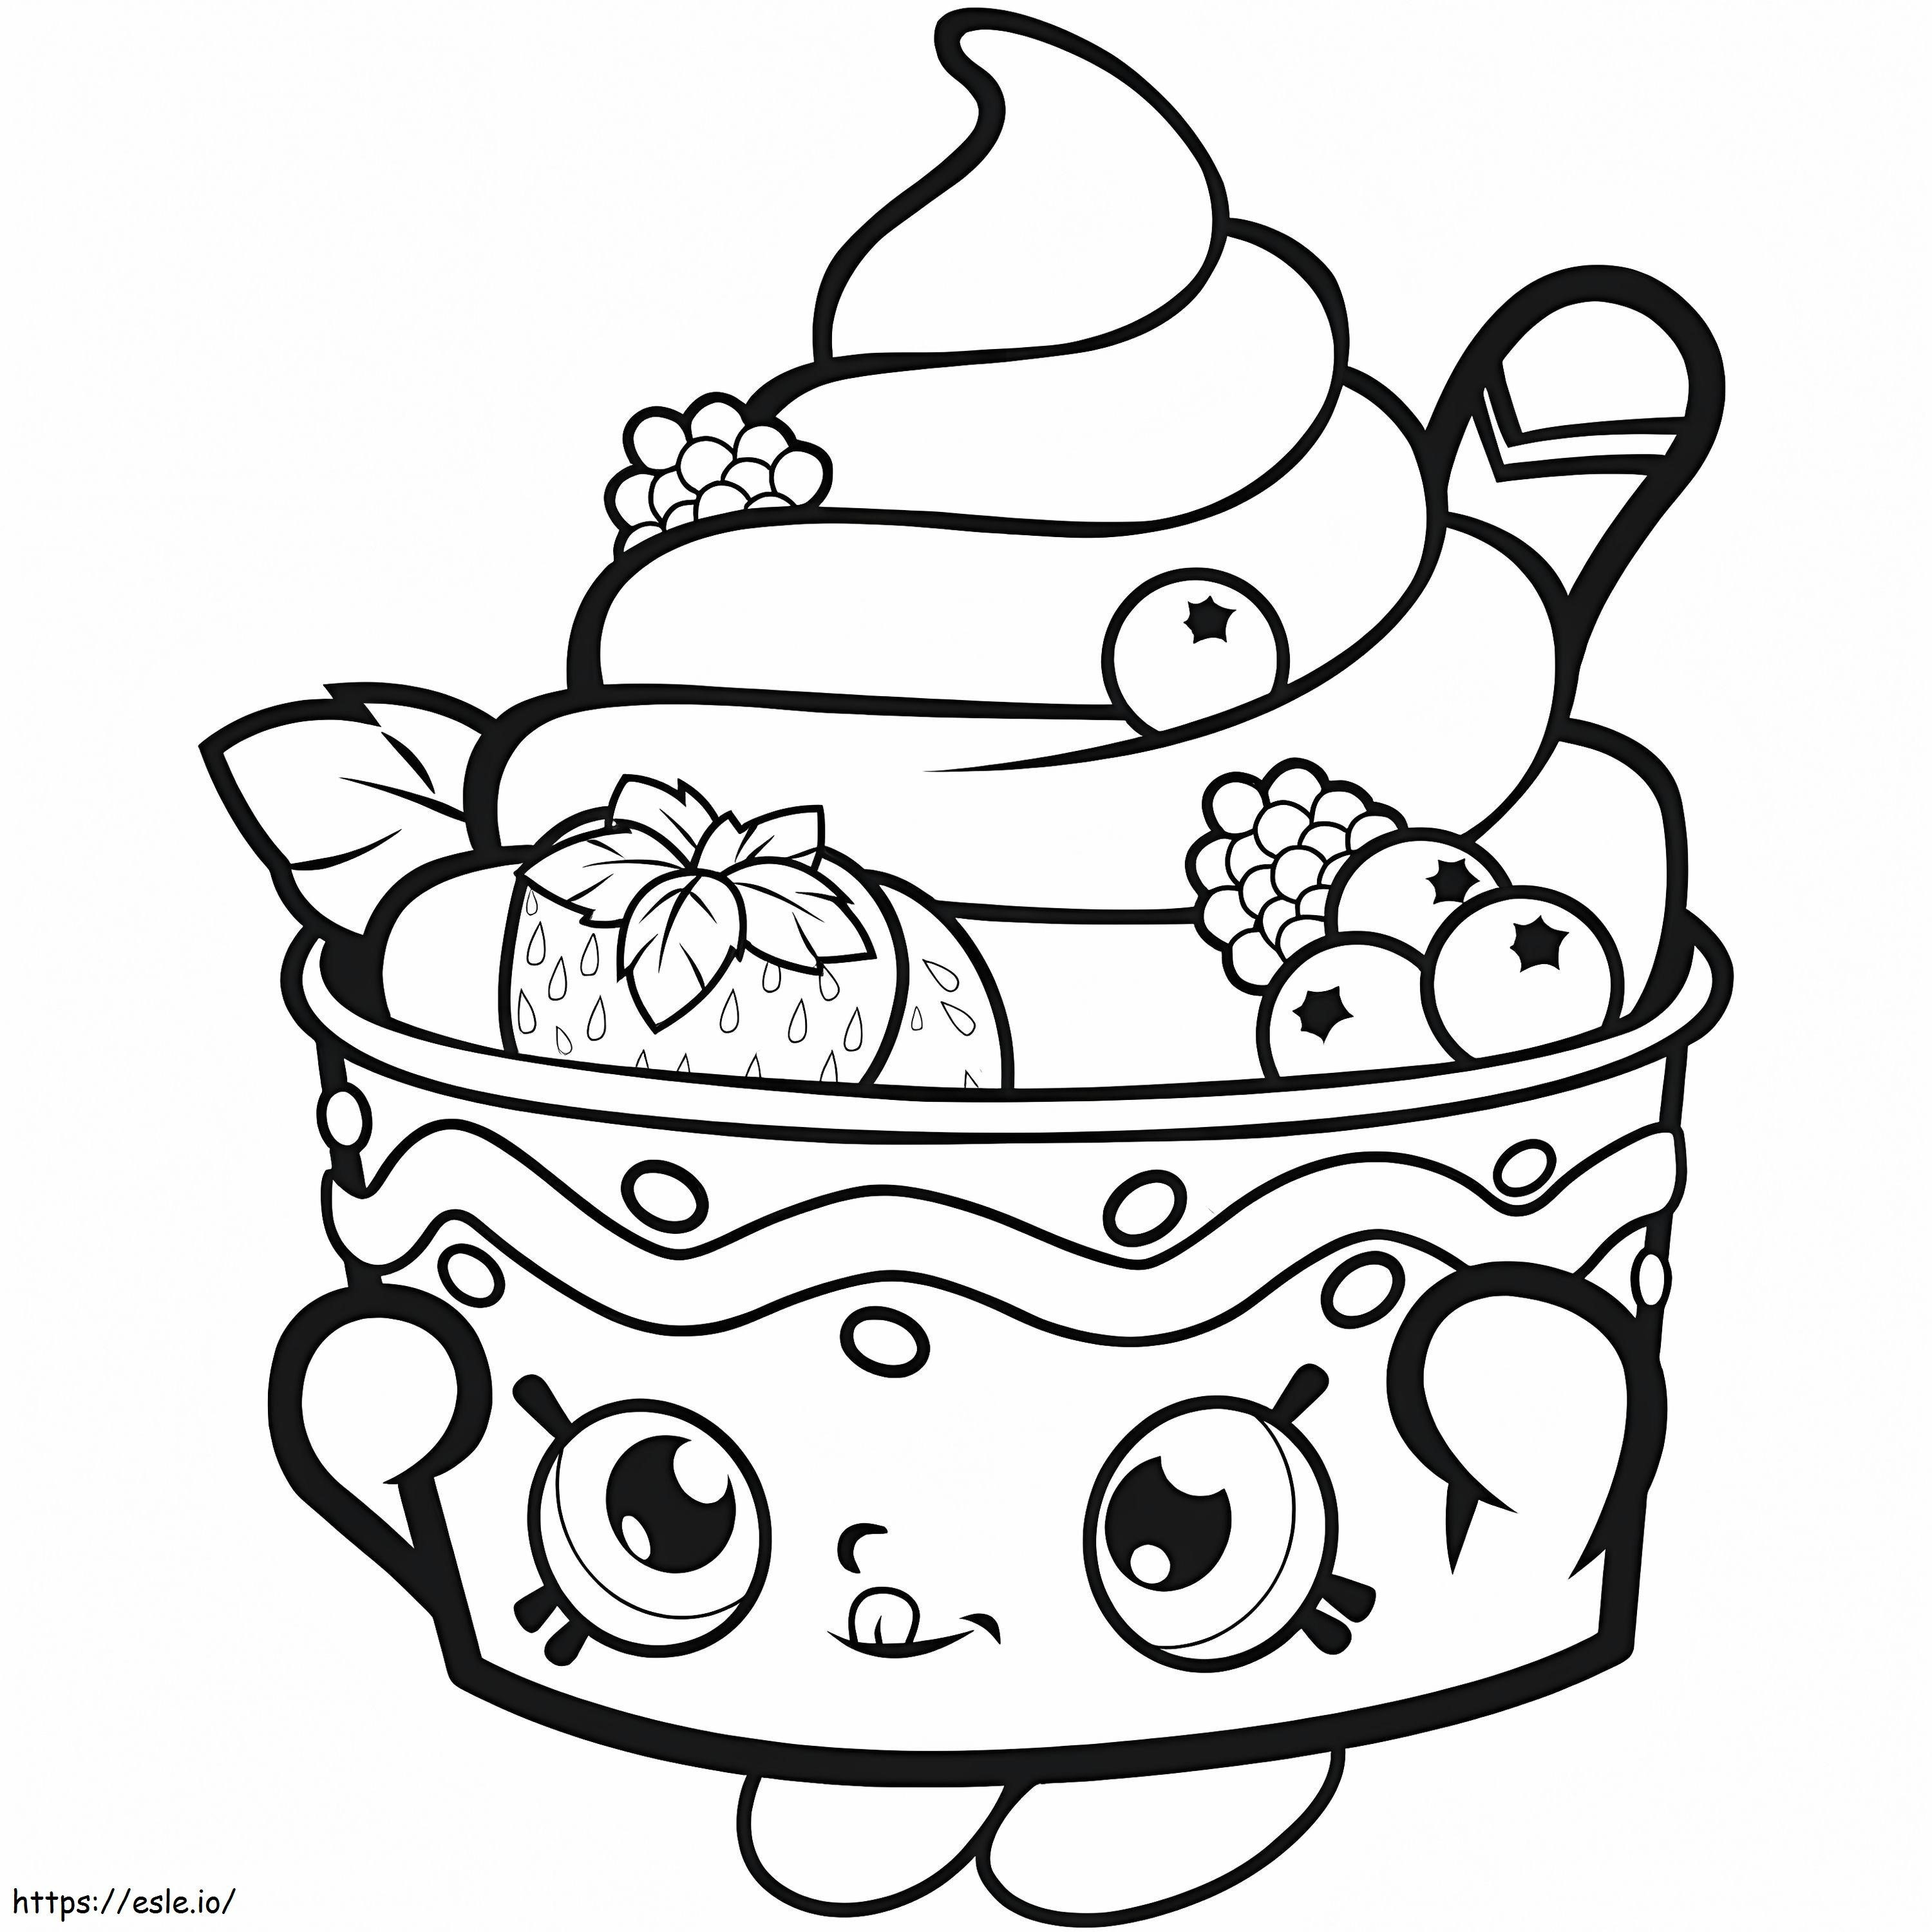 Cartoon Aardbeien Shortcake kleurplaat kleurplaat